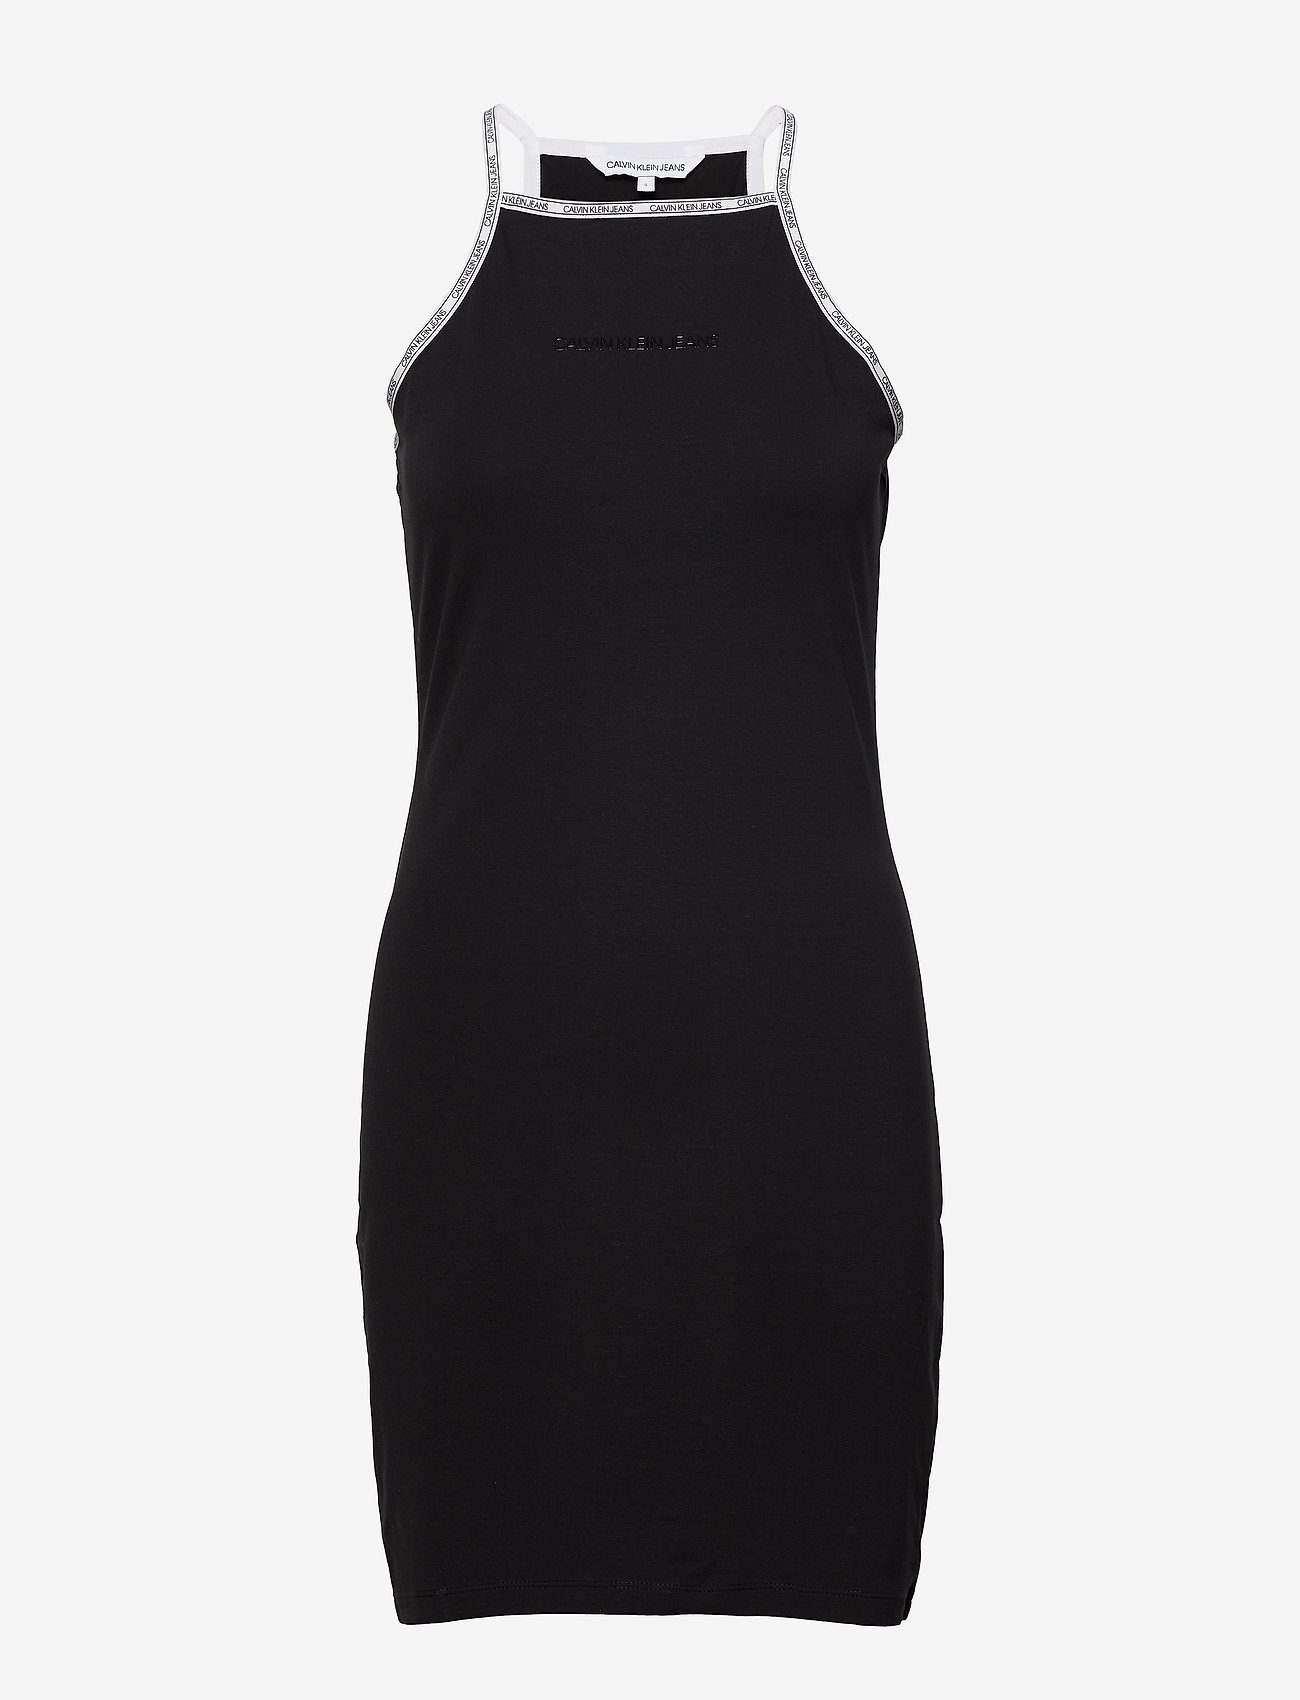 calvin klein black dress with white trim